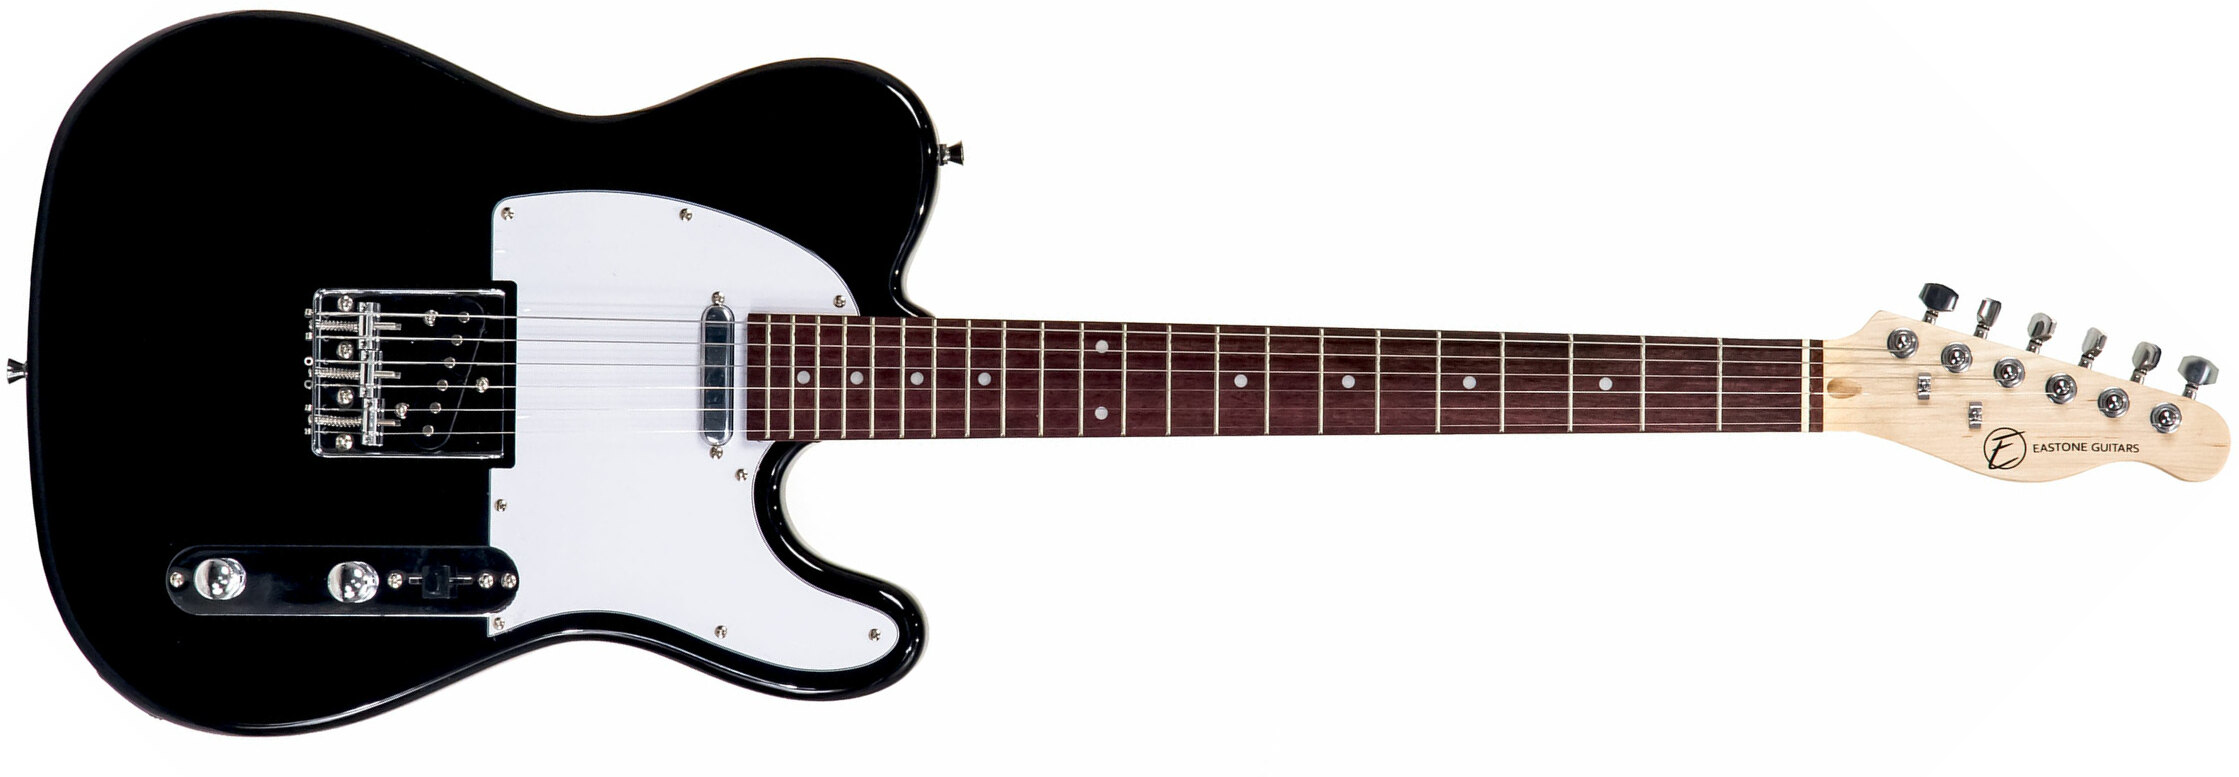 Eastone Tl70 Ss Ht Pur - Black - Tel shape electric guitar - Main picture